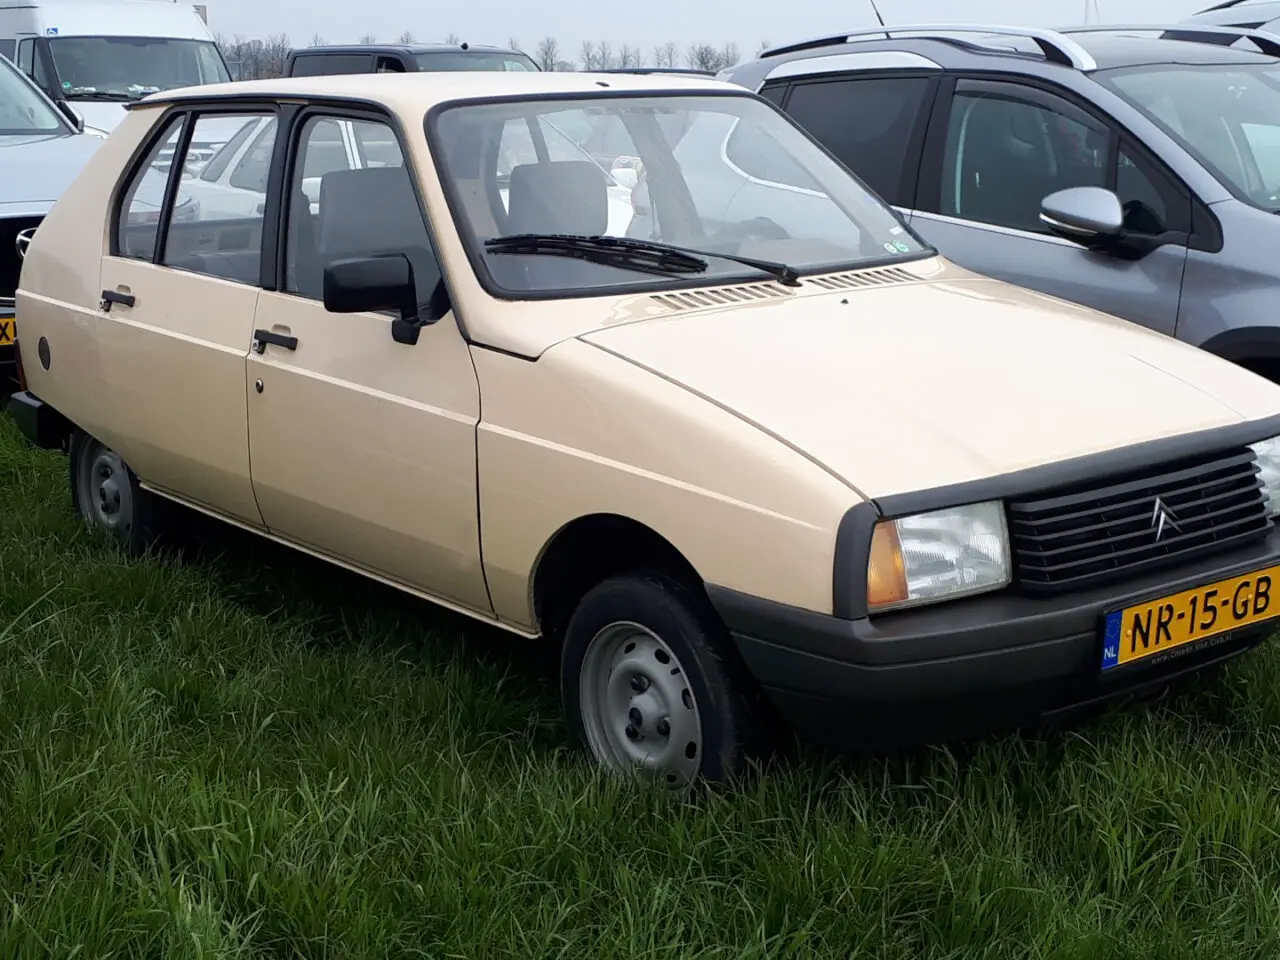 Замечено: Citroën Visa 1985 года выпуска.